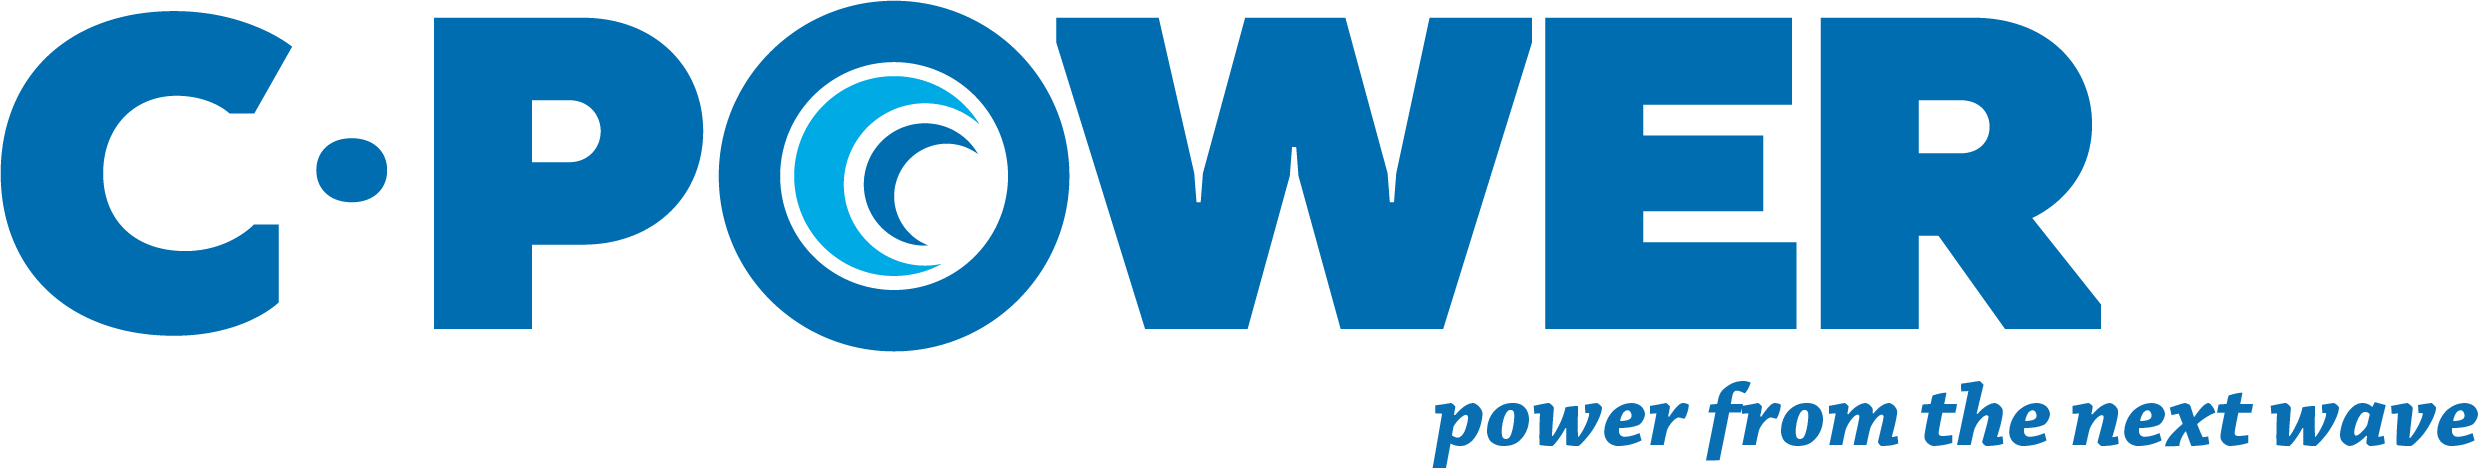 cpower logo CMYK tagline 2